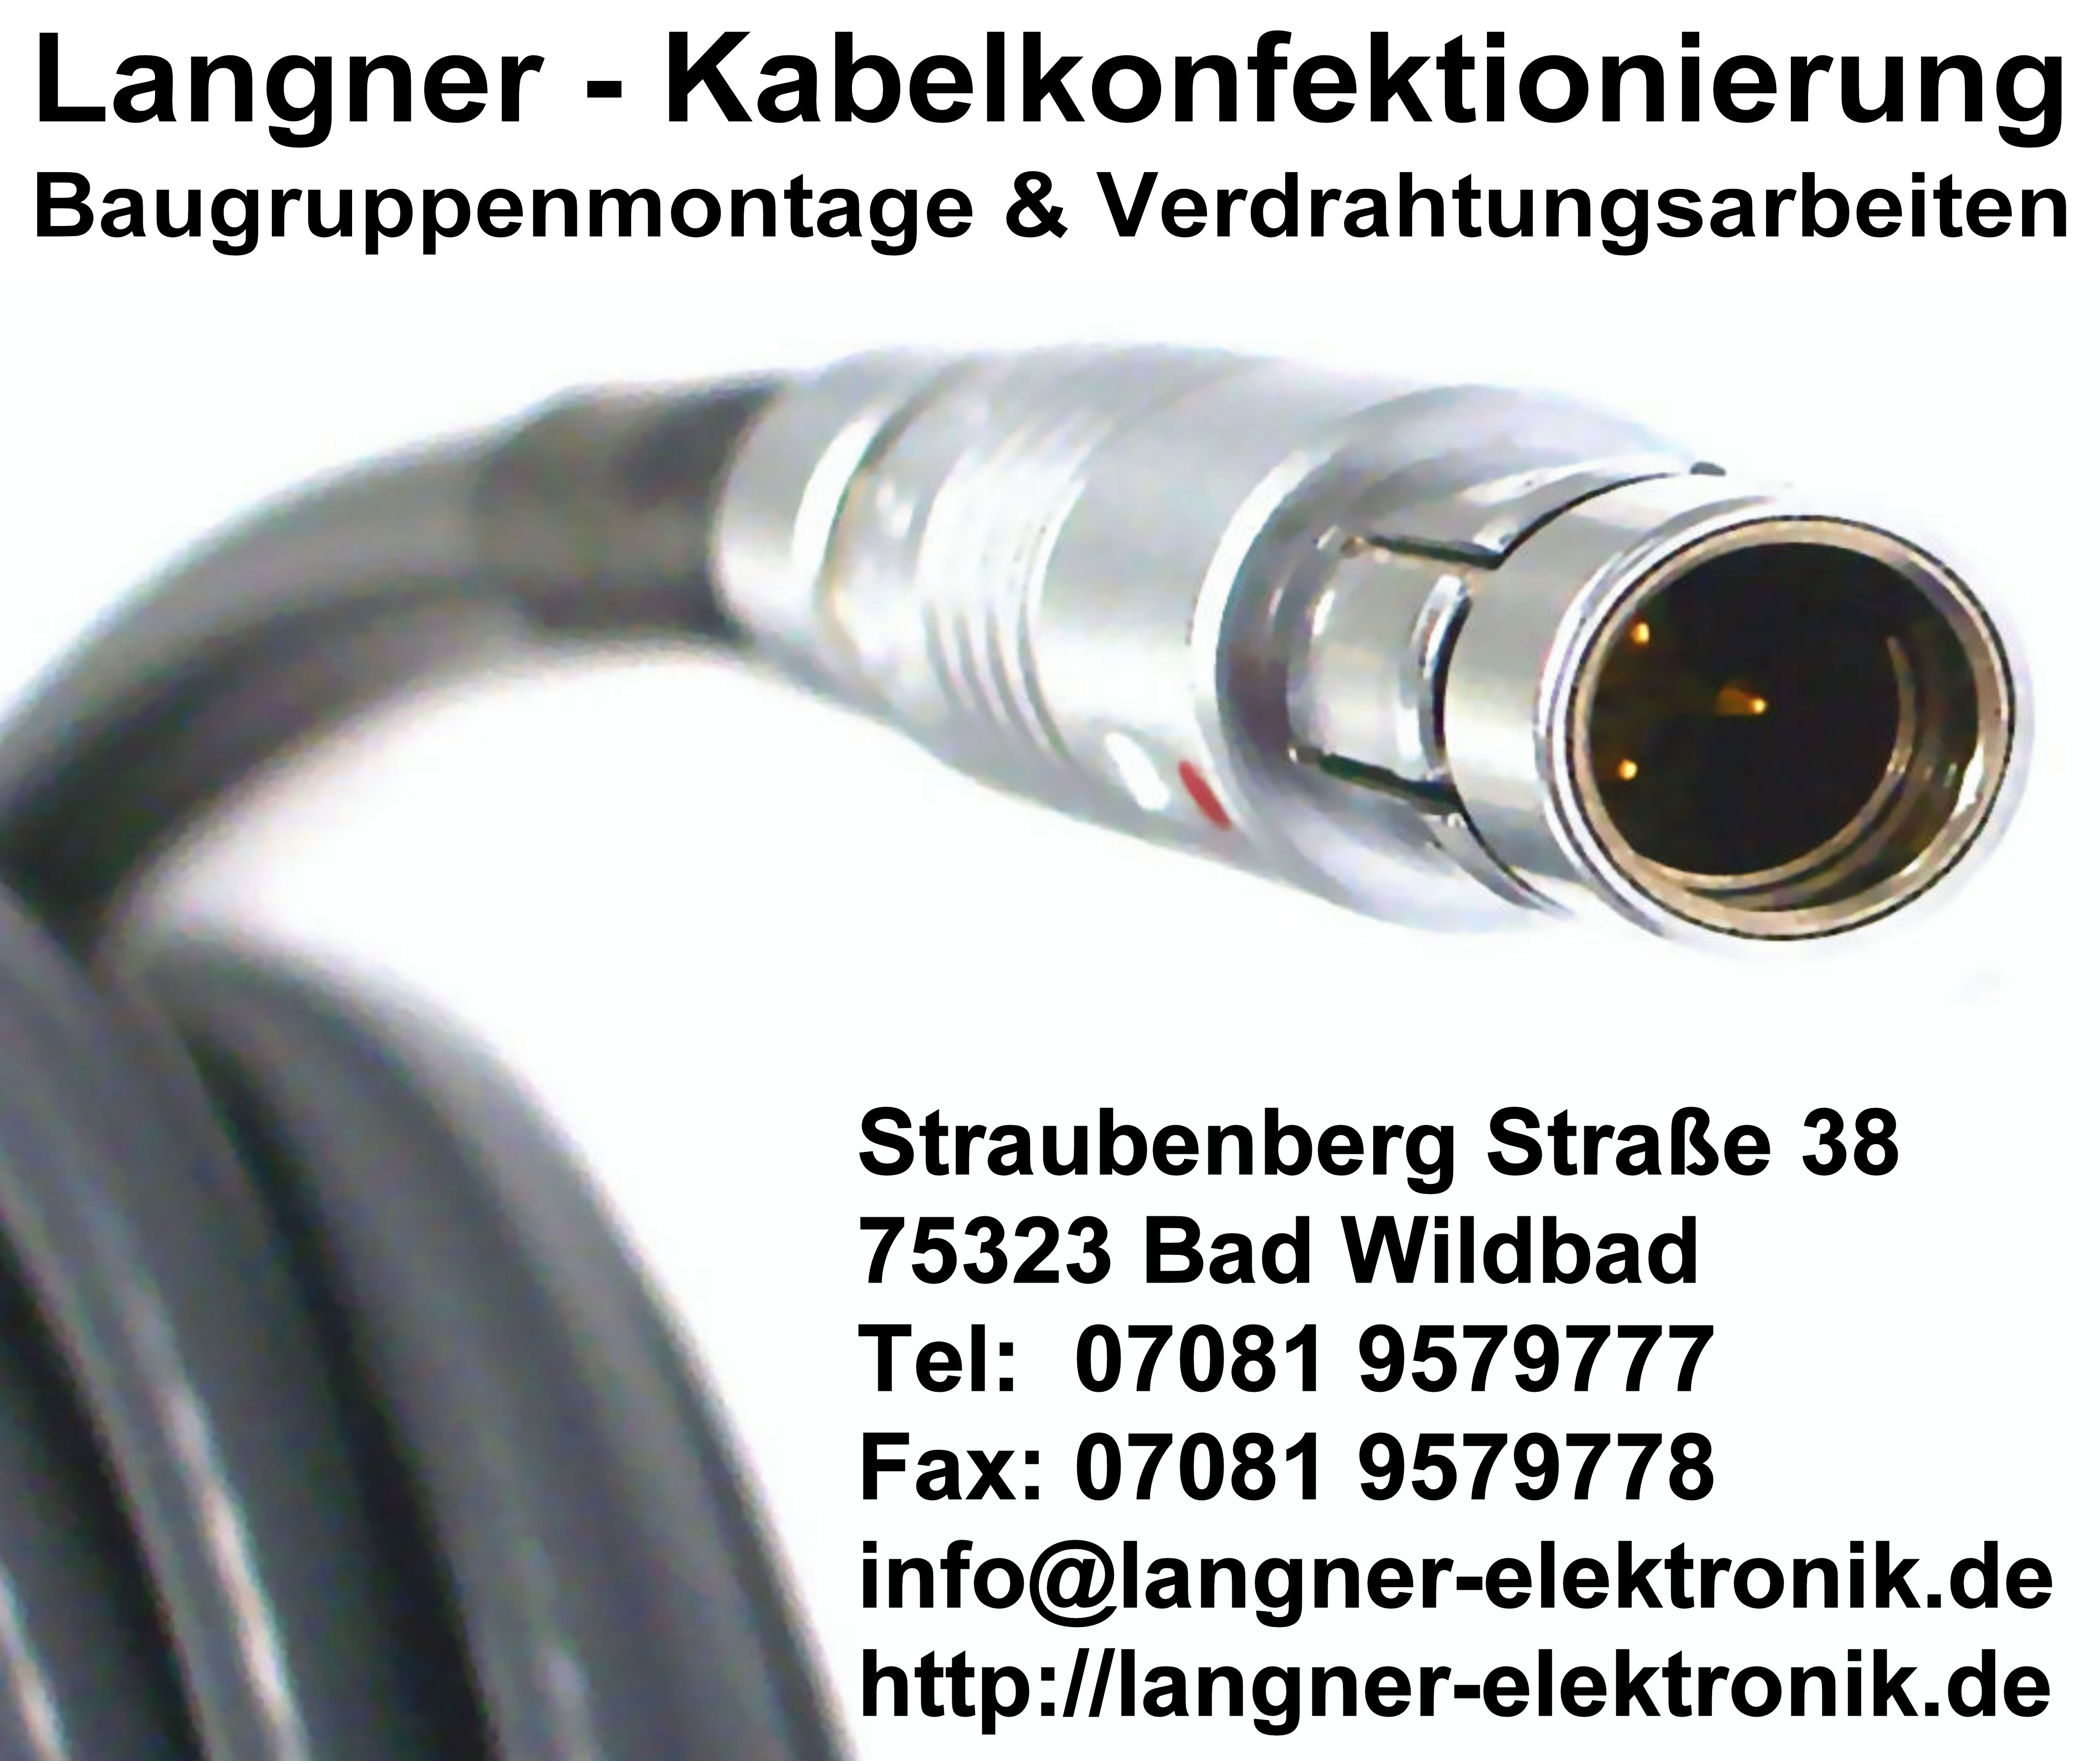 (c) Kabelkonfektionierung-baugruppenmontage.de